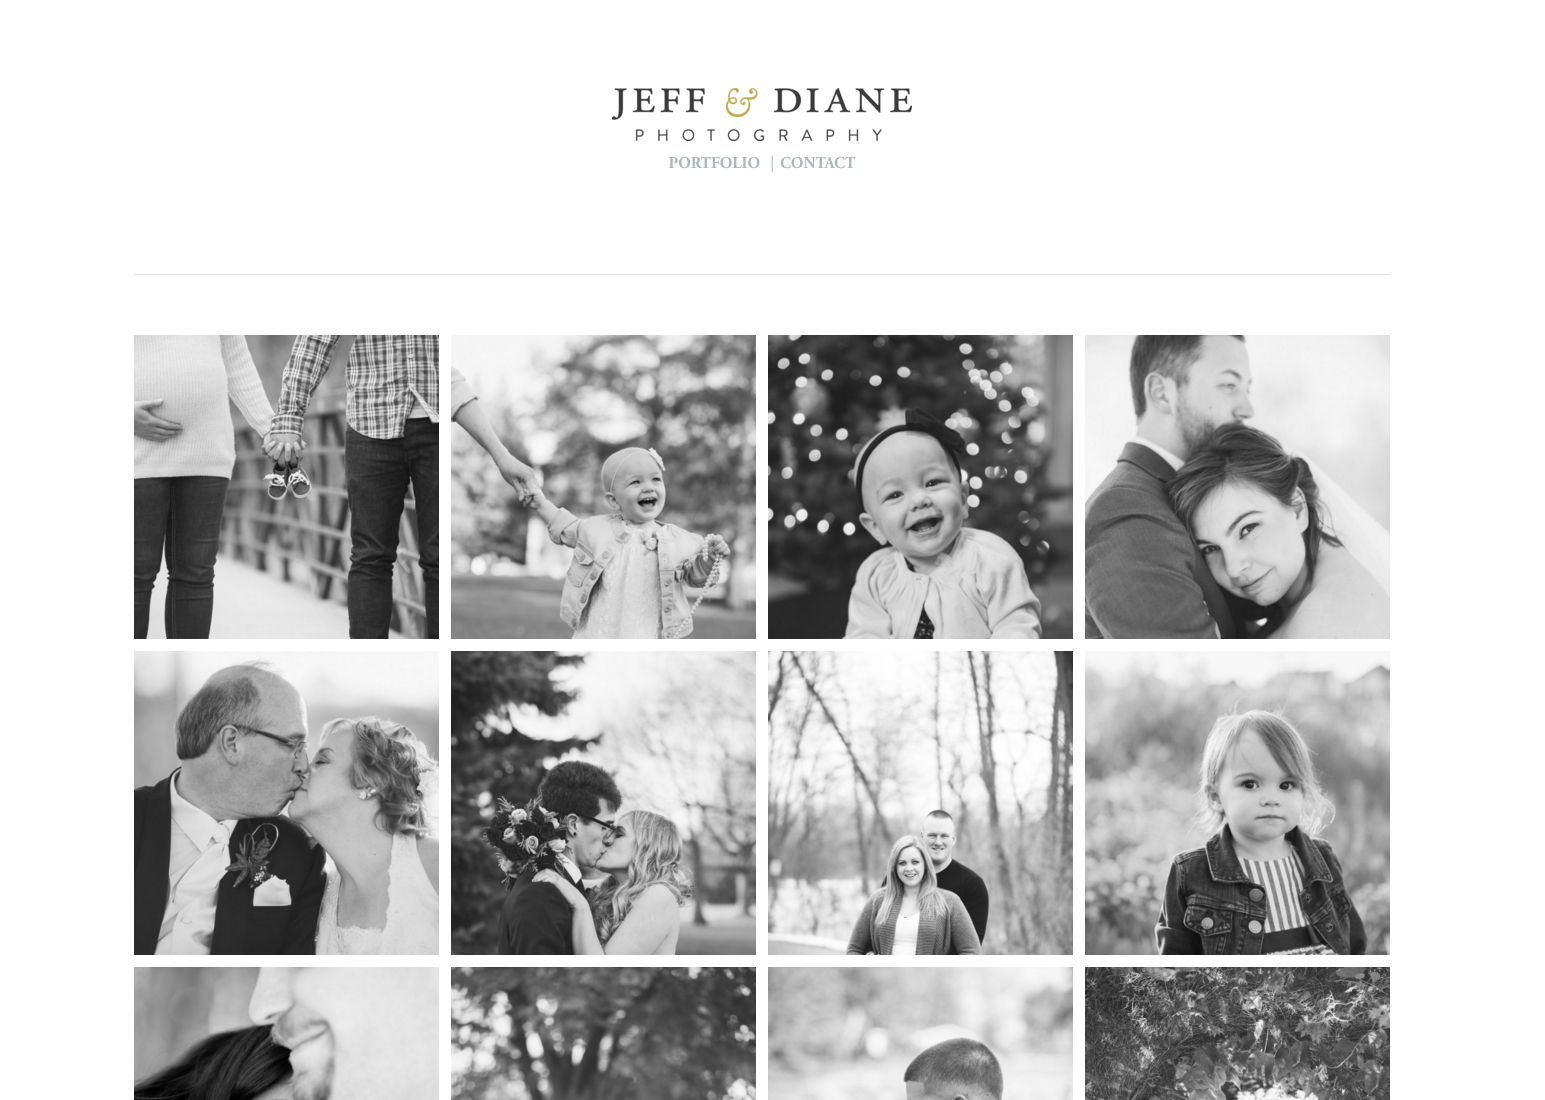 Jeff & Diane Photography Website